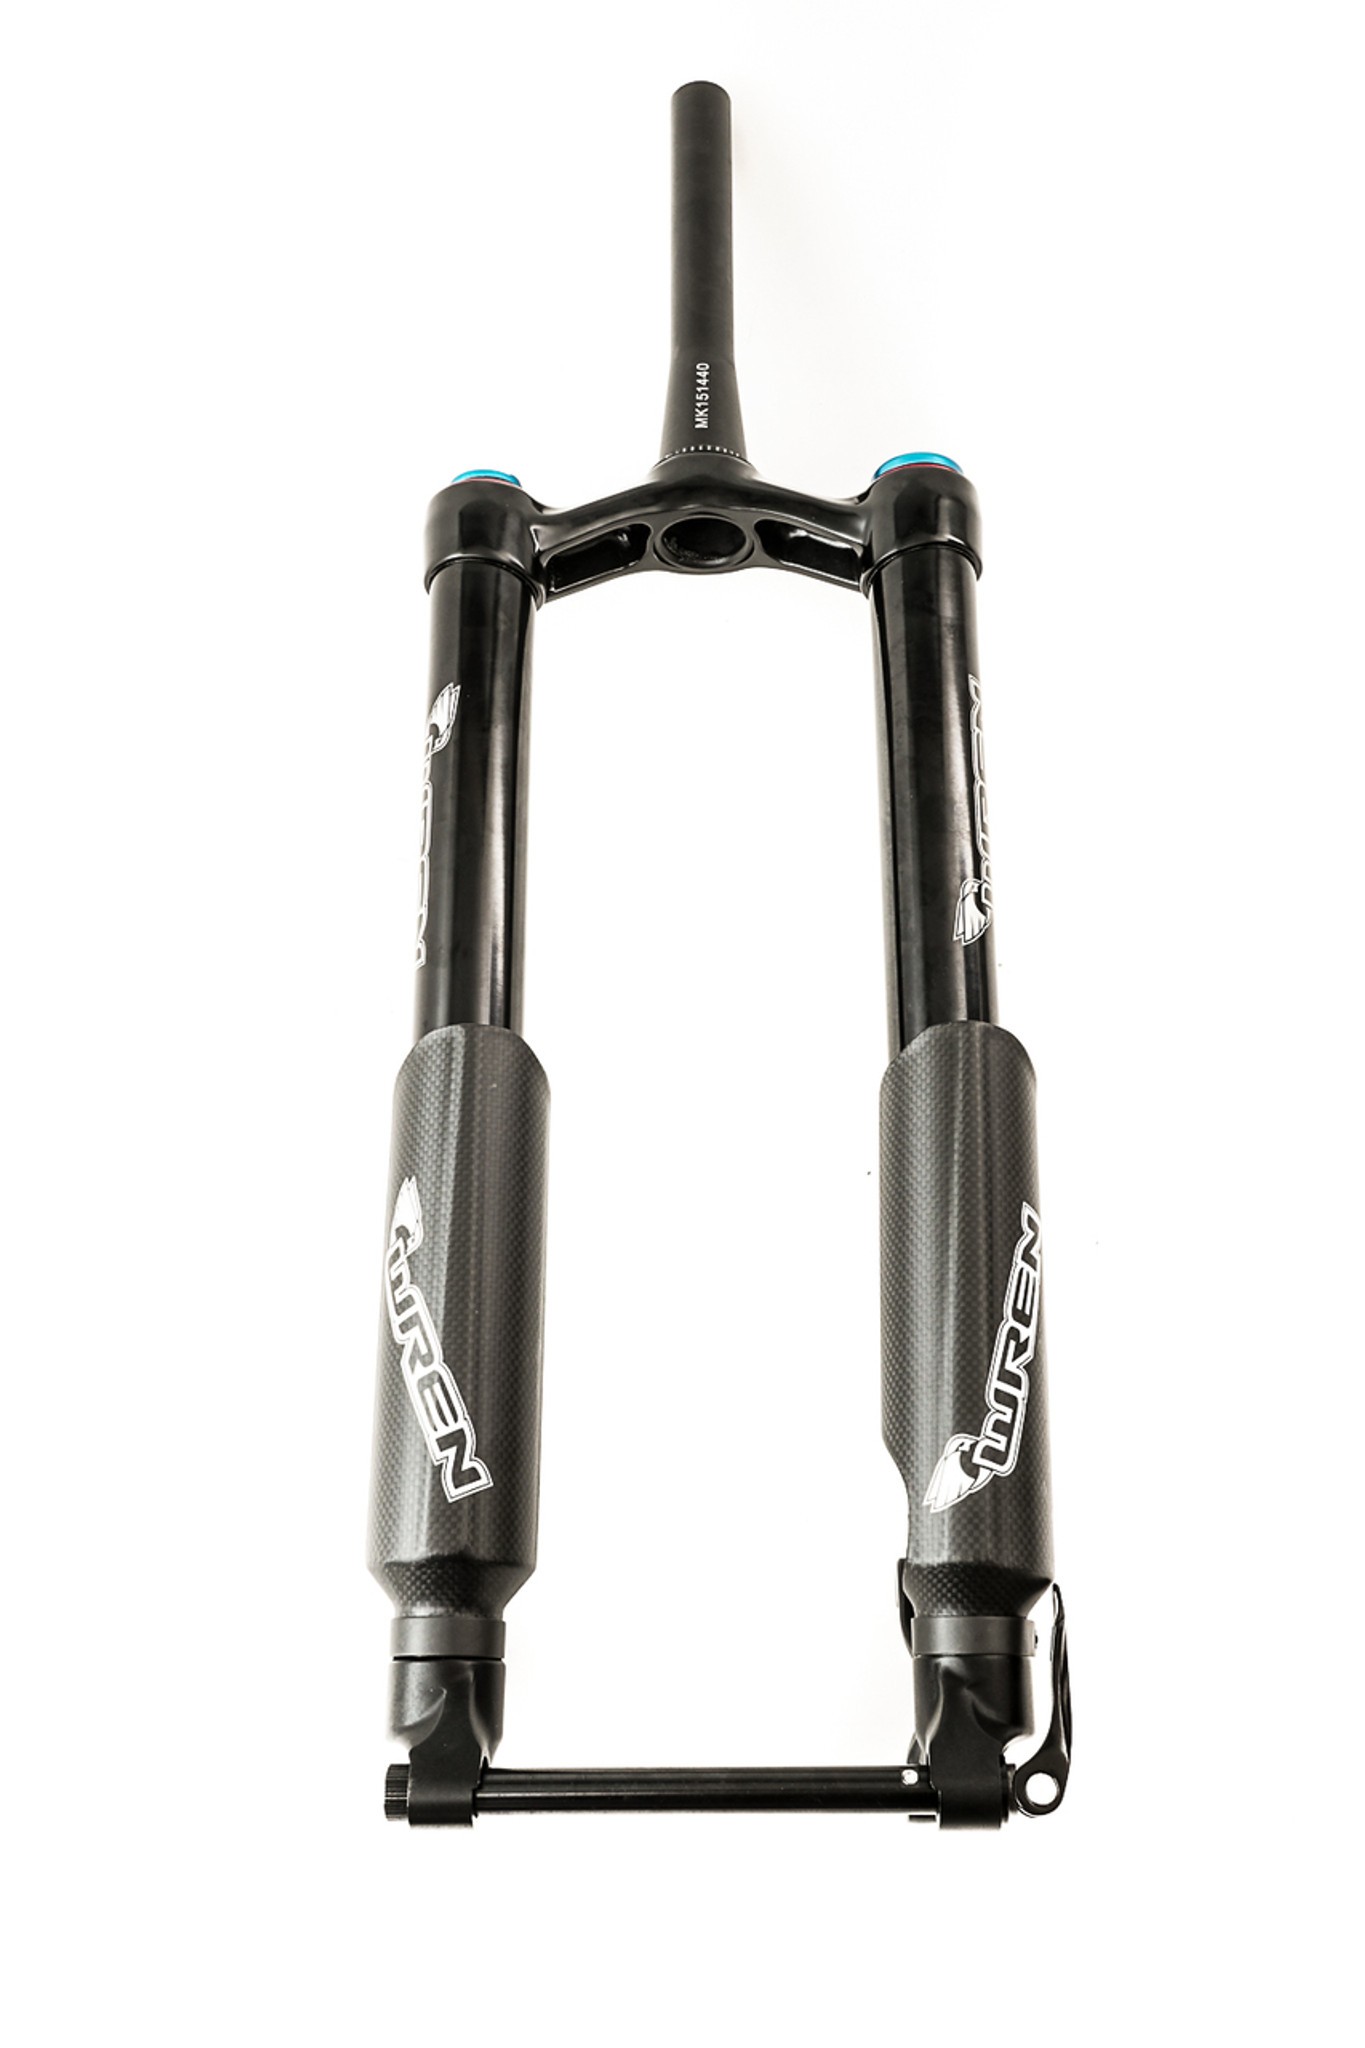 wren suspension fork review